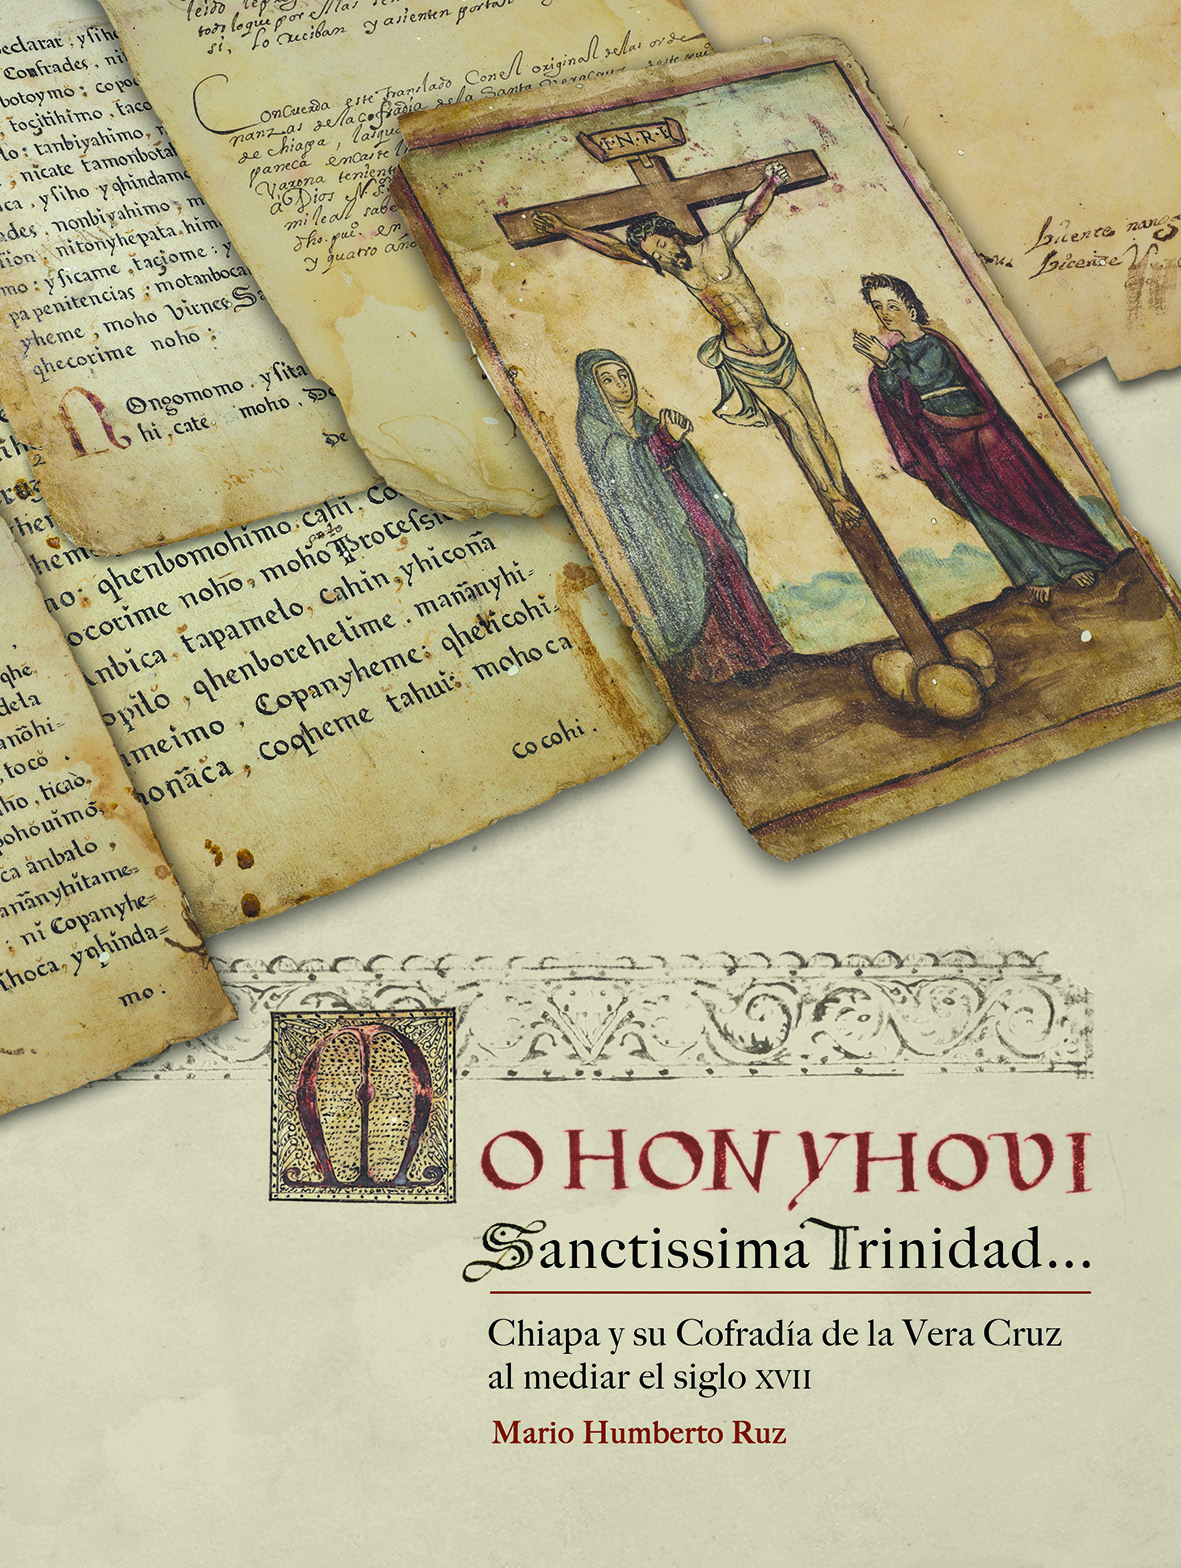 Mohonyhovi Sanctissima Trinidad